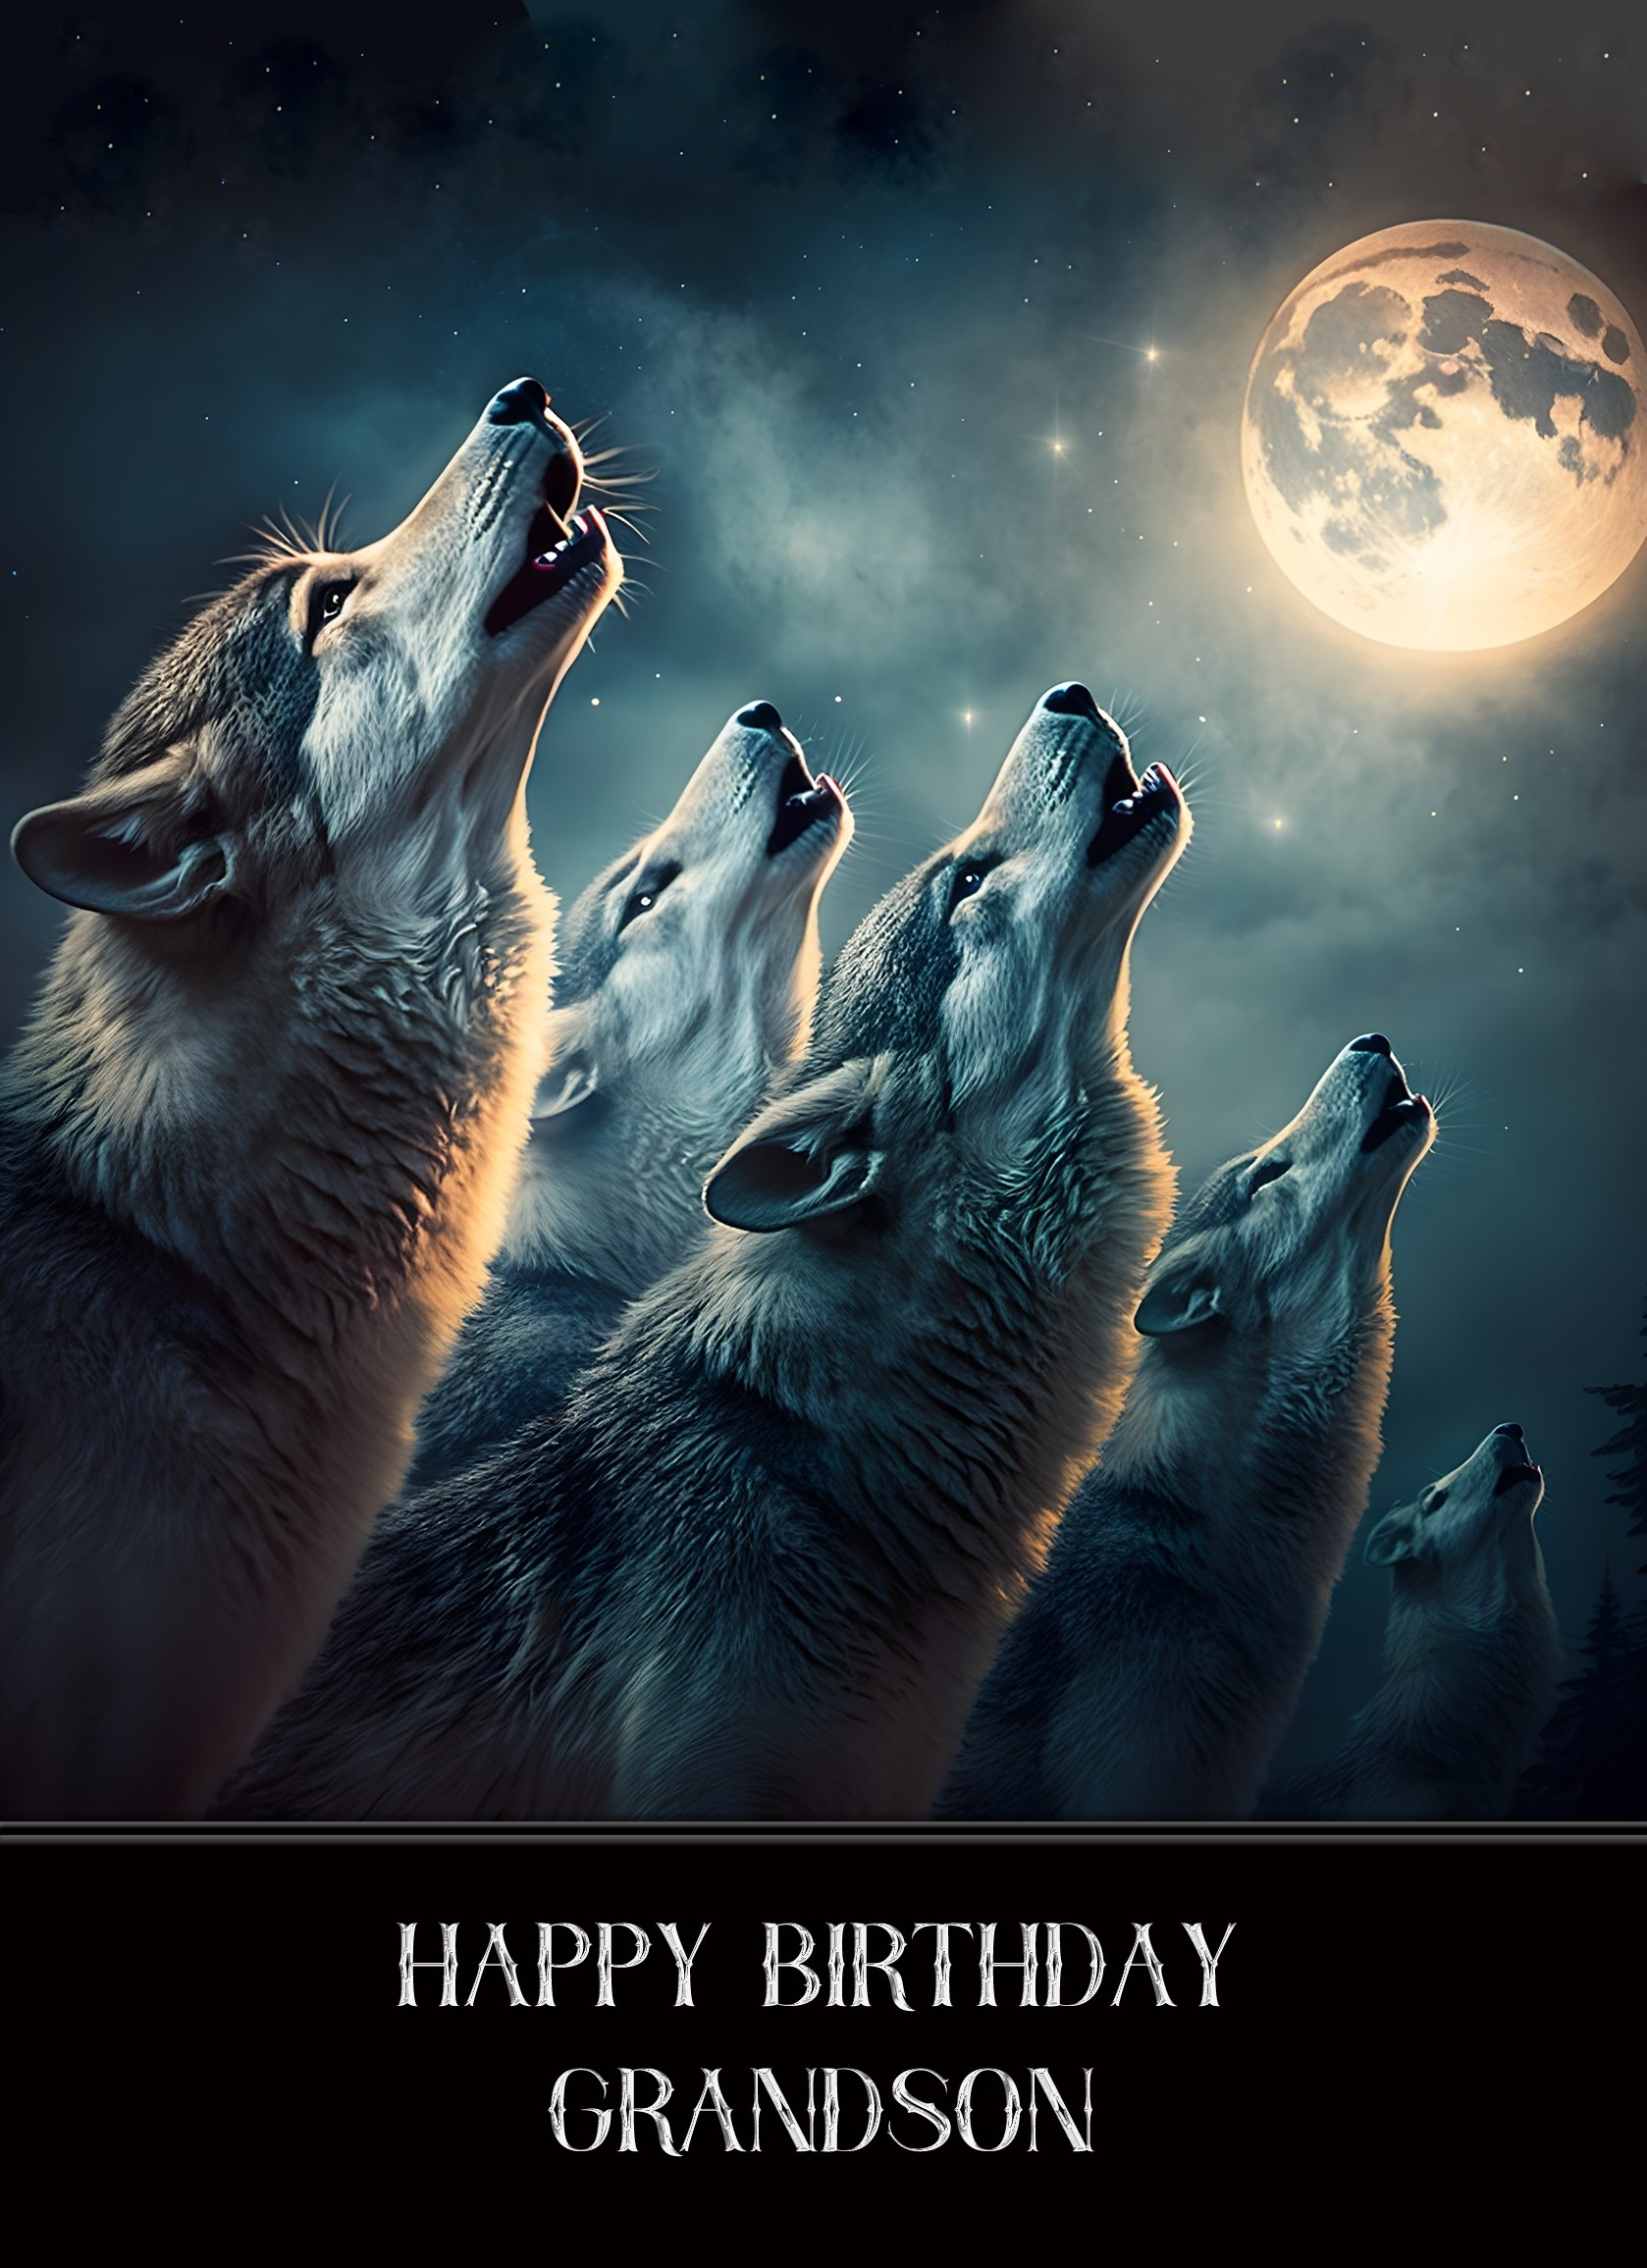 Wolf Fantasy Birthday Card for Grandson